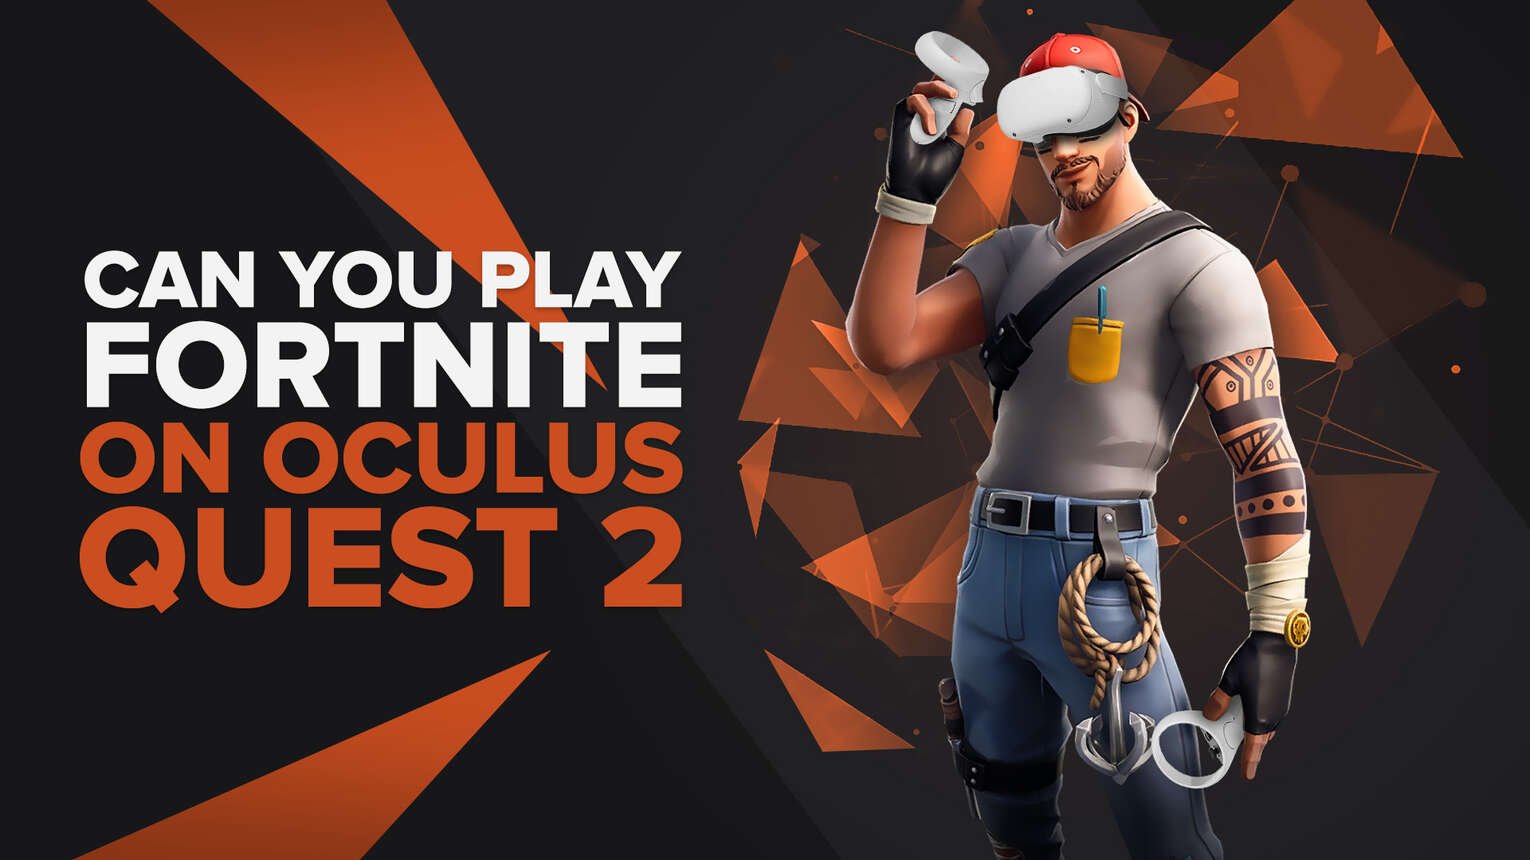 Fortnite VR ב- Oculus Quest 2 - האם זה אפשרי?